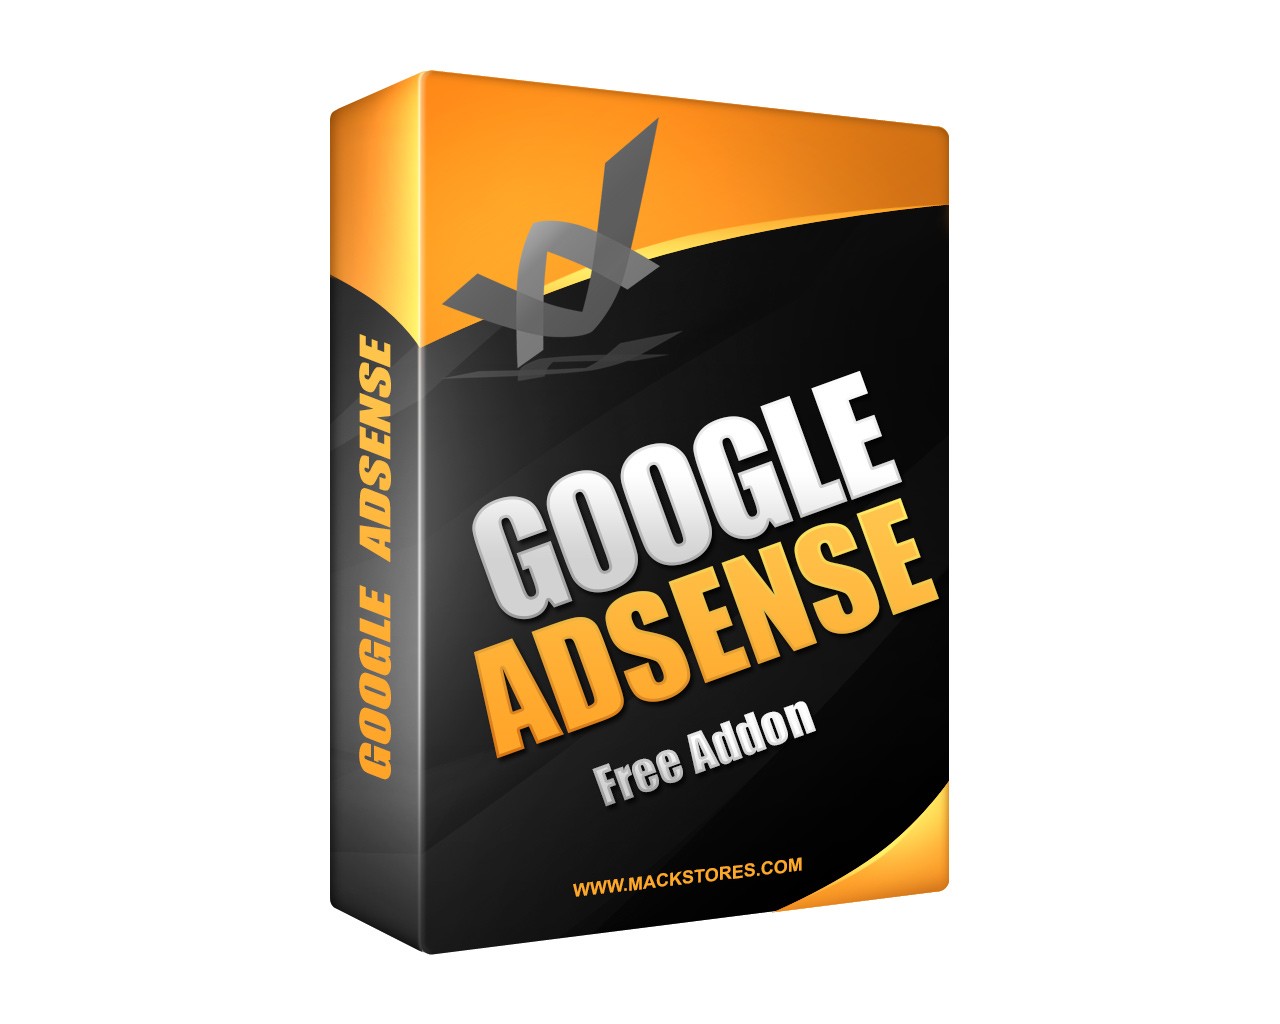 Google Adsense Free